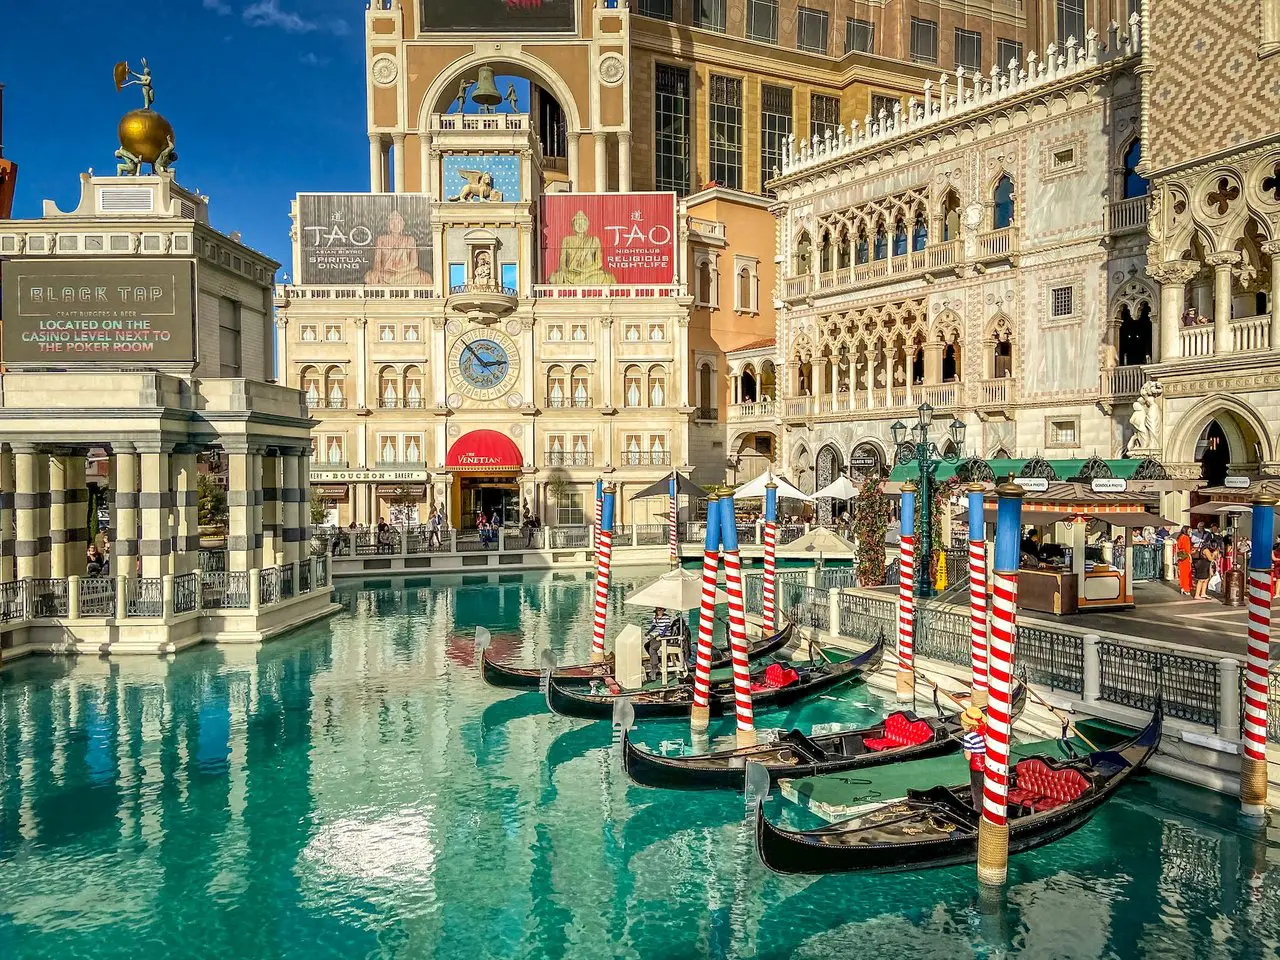 The Venetian Gondolas